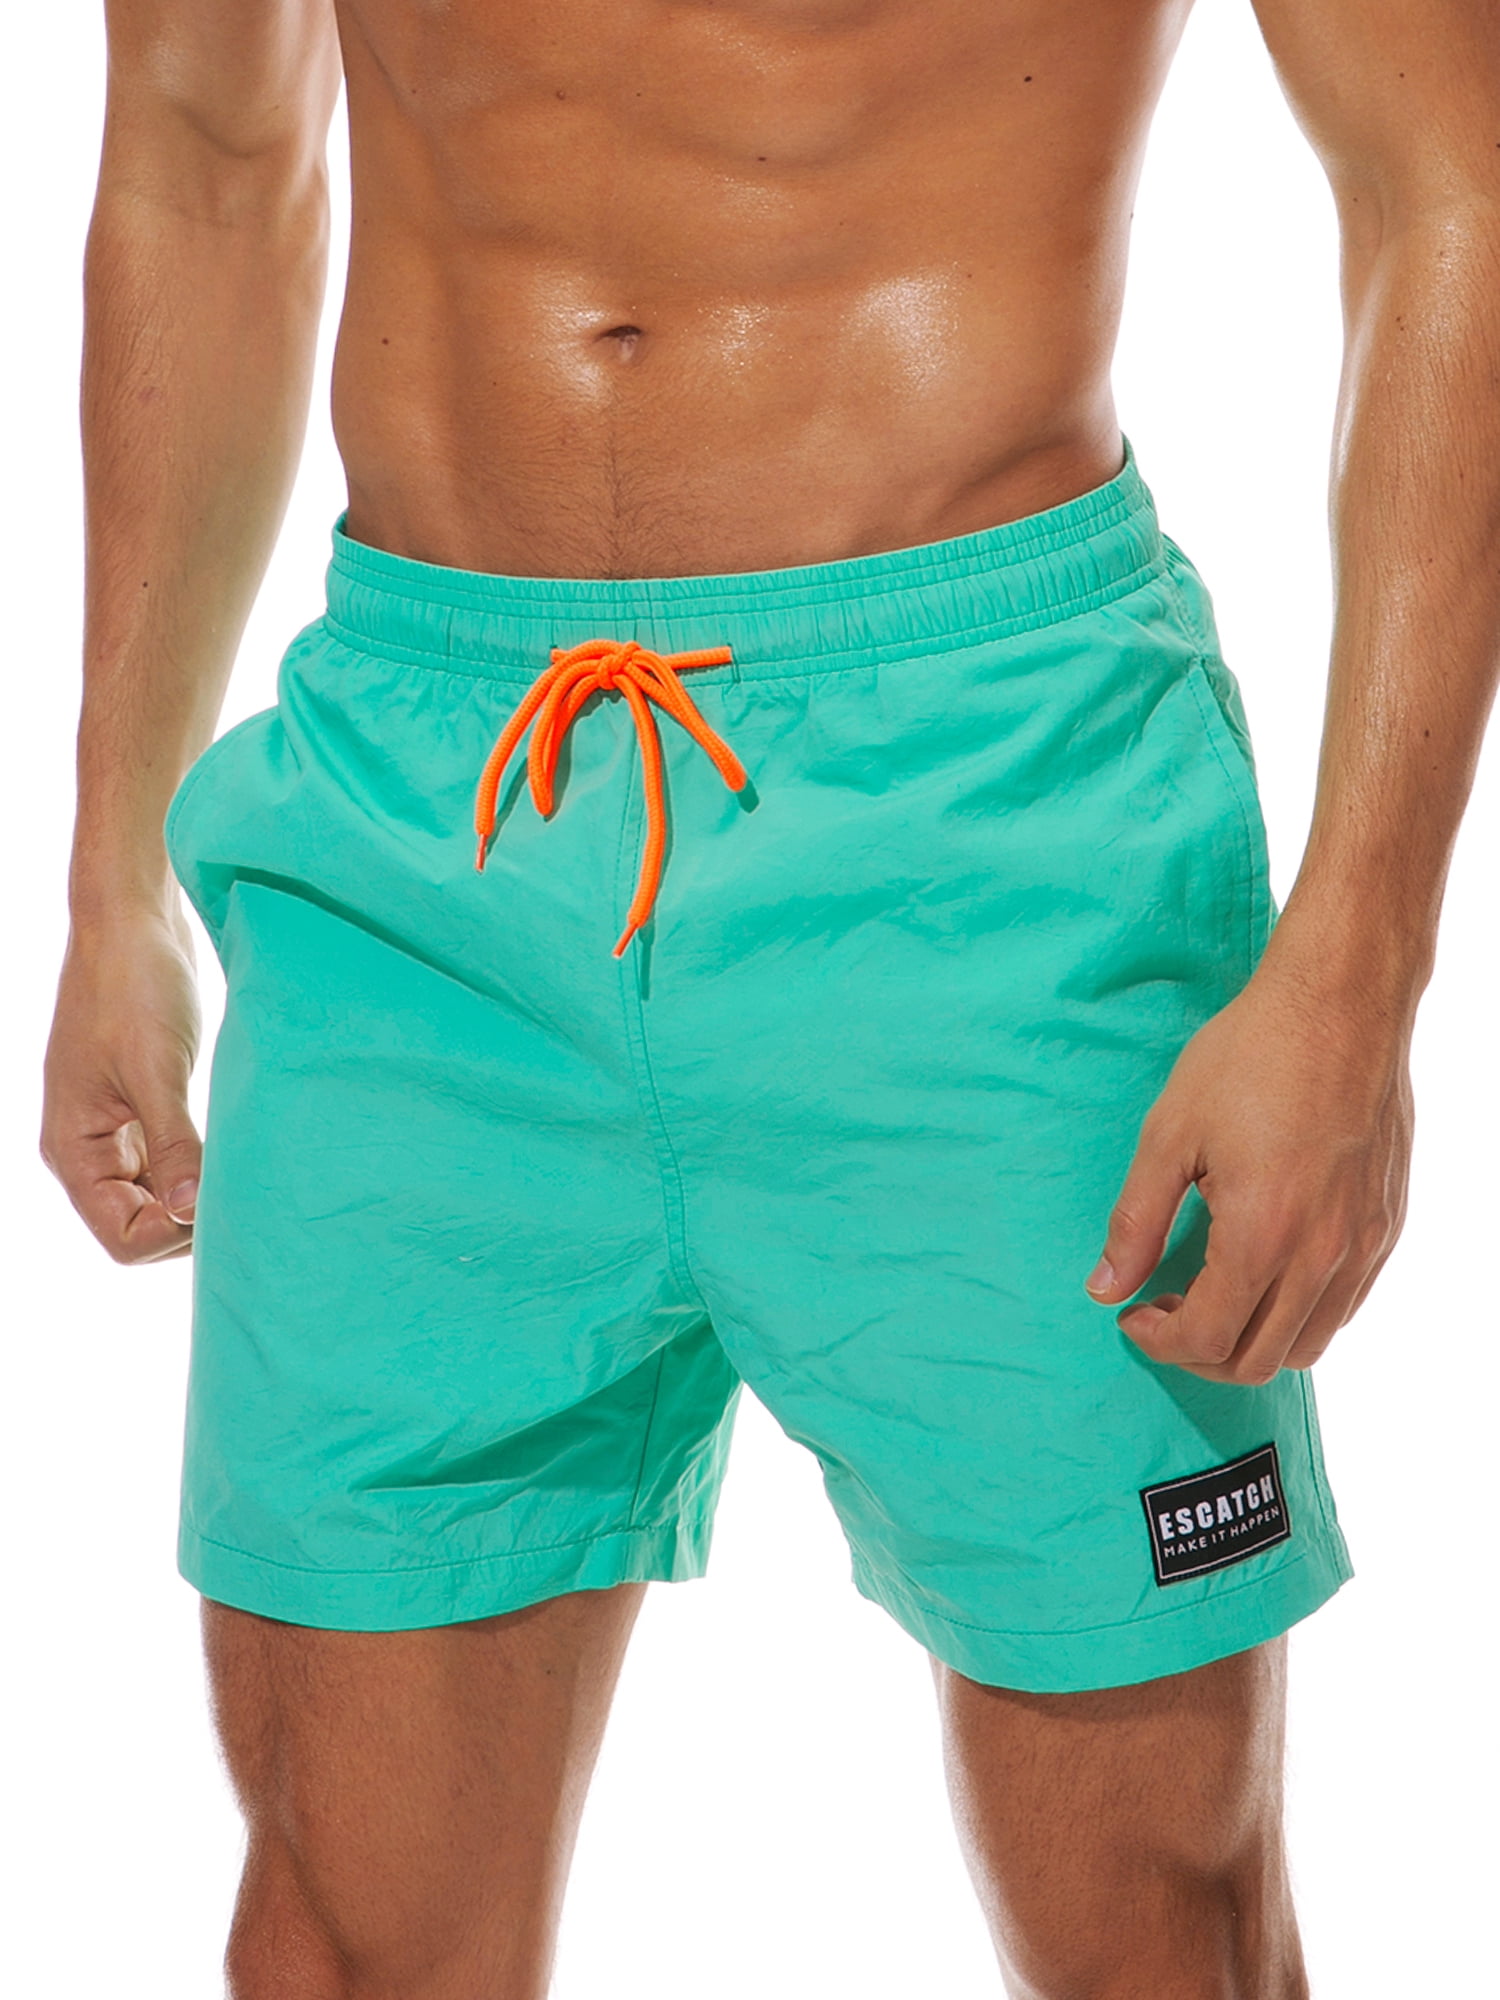 Teen Boys Summer Casual Swim Trunks Quick Dry Surf Board Shorts Beachwear Pants 